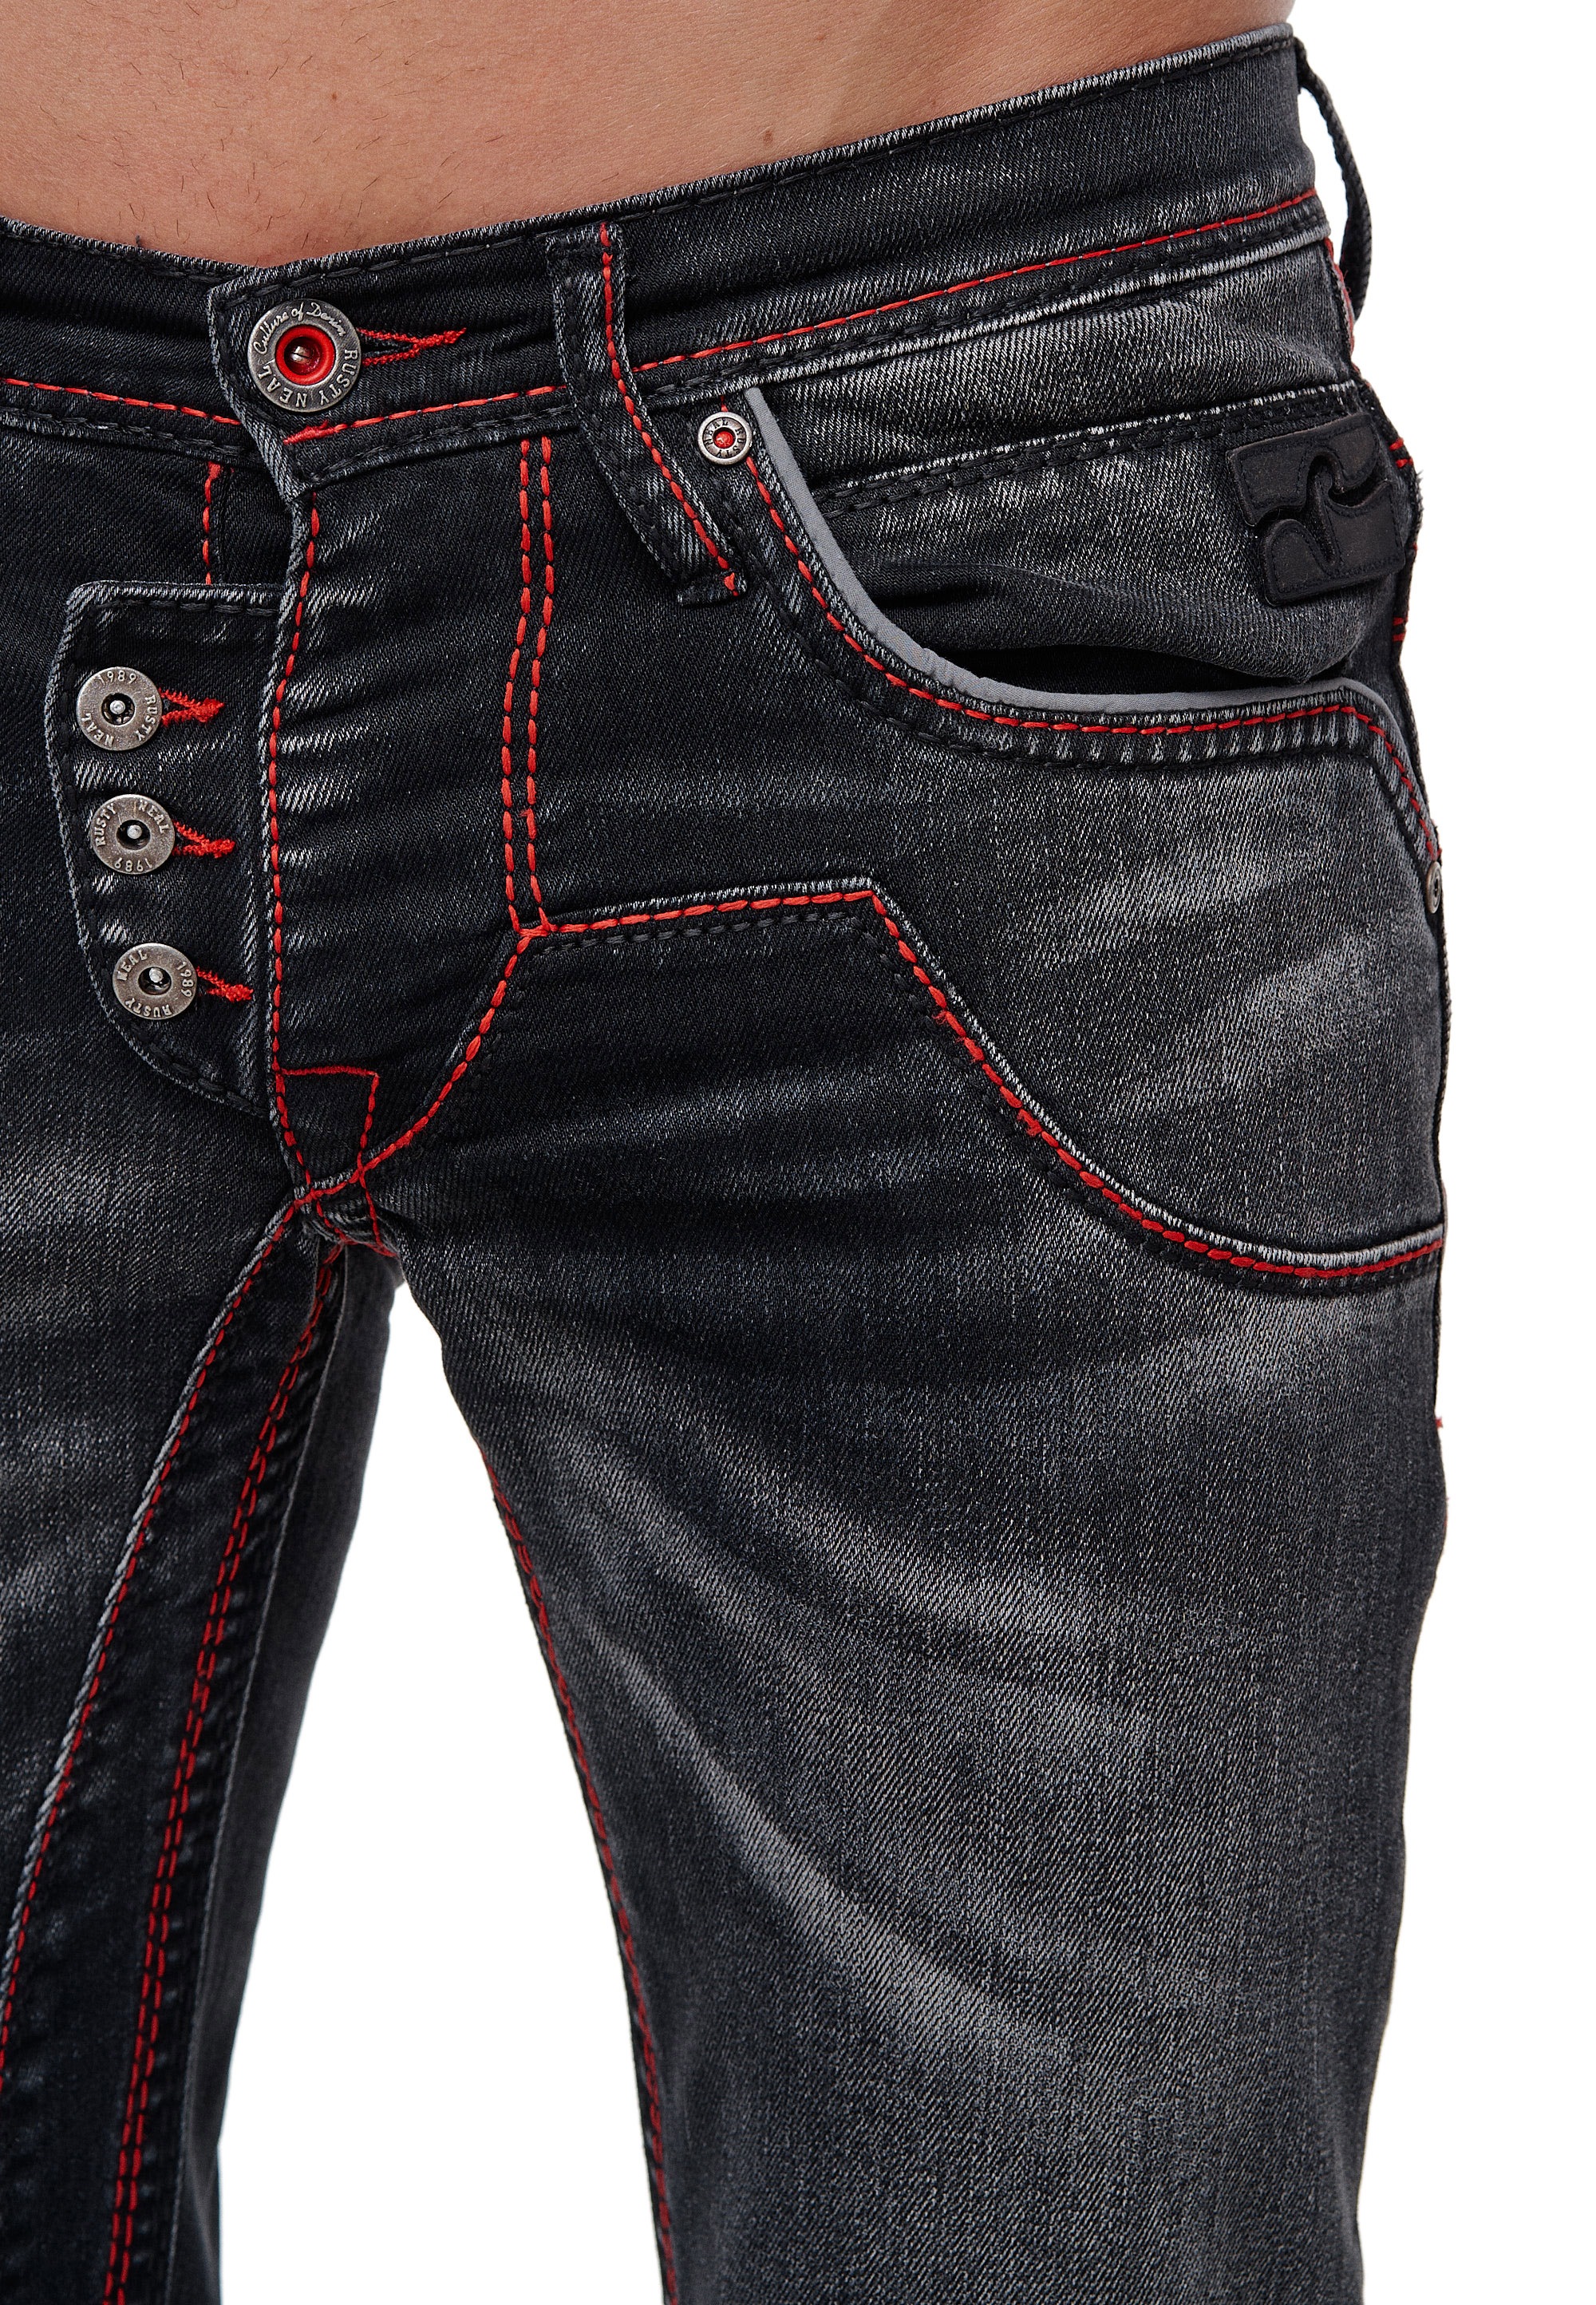 Rusty Neal Straight-Jeans »RUBEN 45«, mit trendigen Kontrastnähten